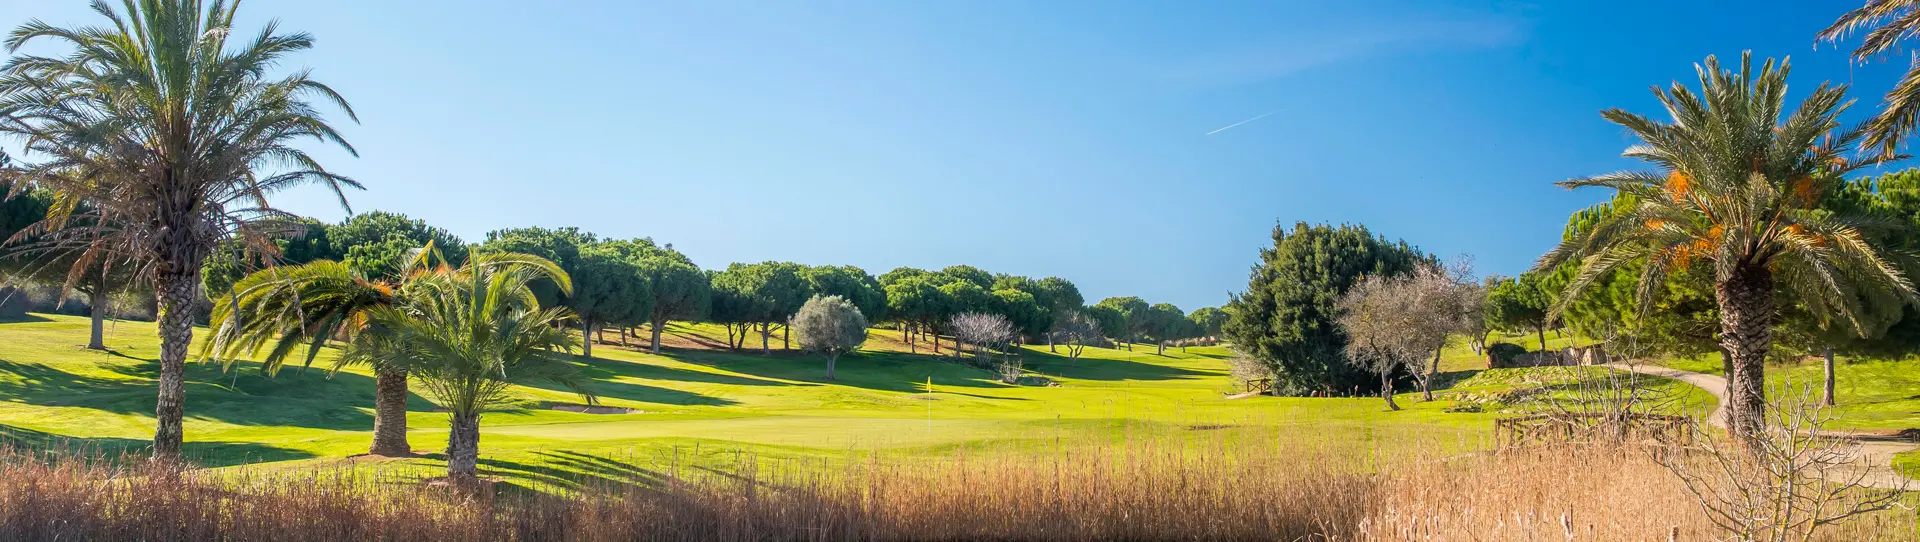 Portugal golf holidays - Boavista 3 Rounds + 1 Free - Photo 1